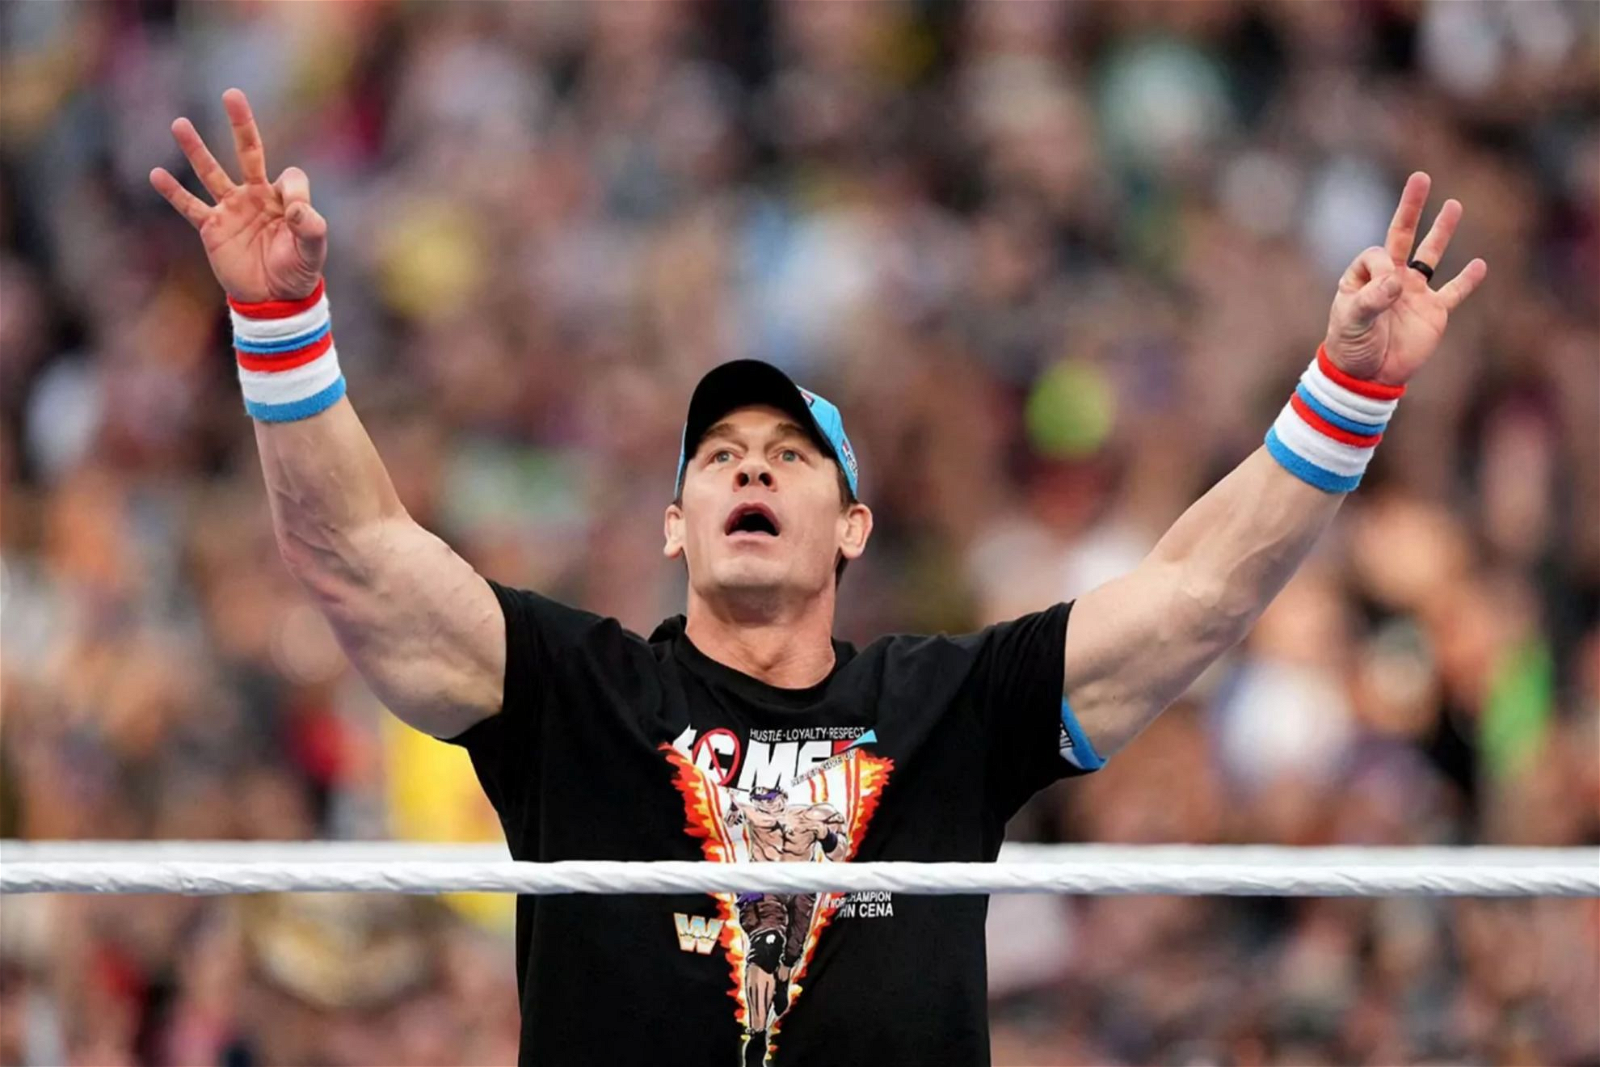 John Cena with his signature hand gesture 